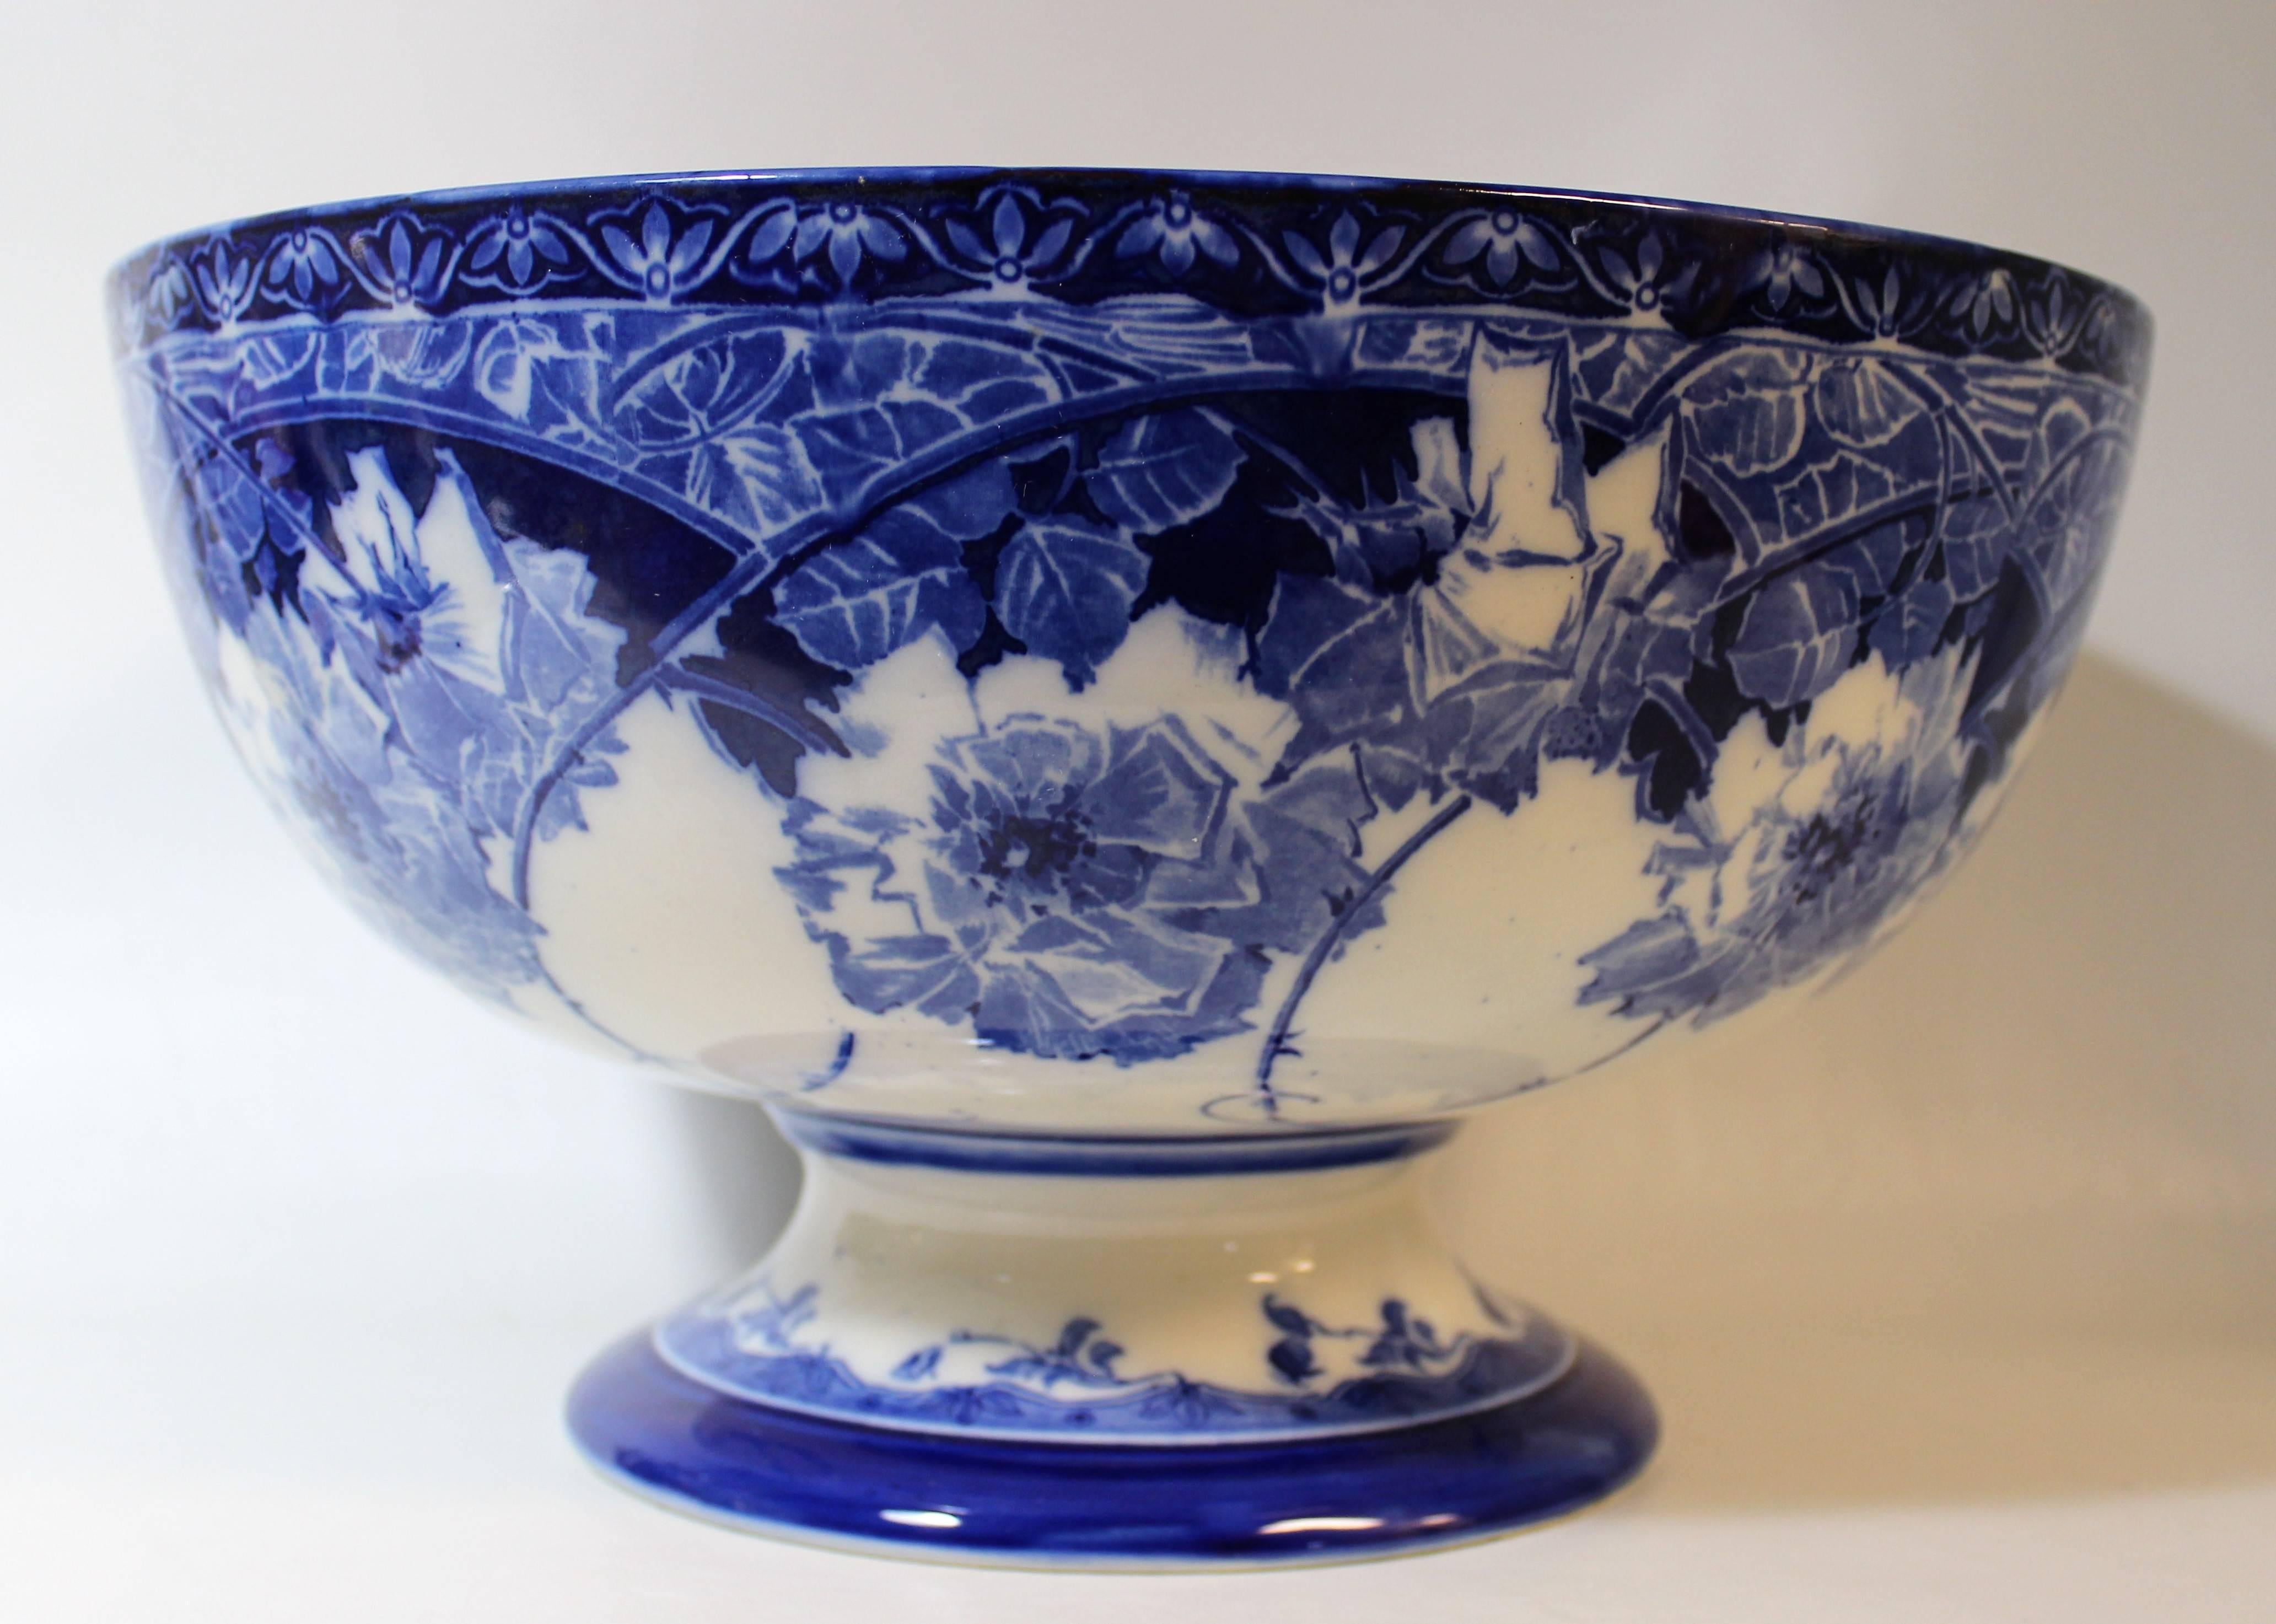 Large Royal Doulton briar rose blue and white pedestal bowl.